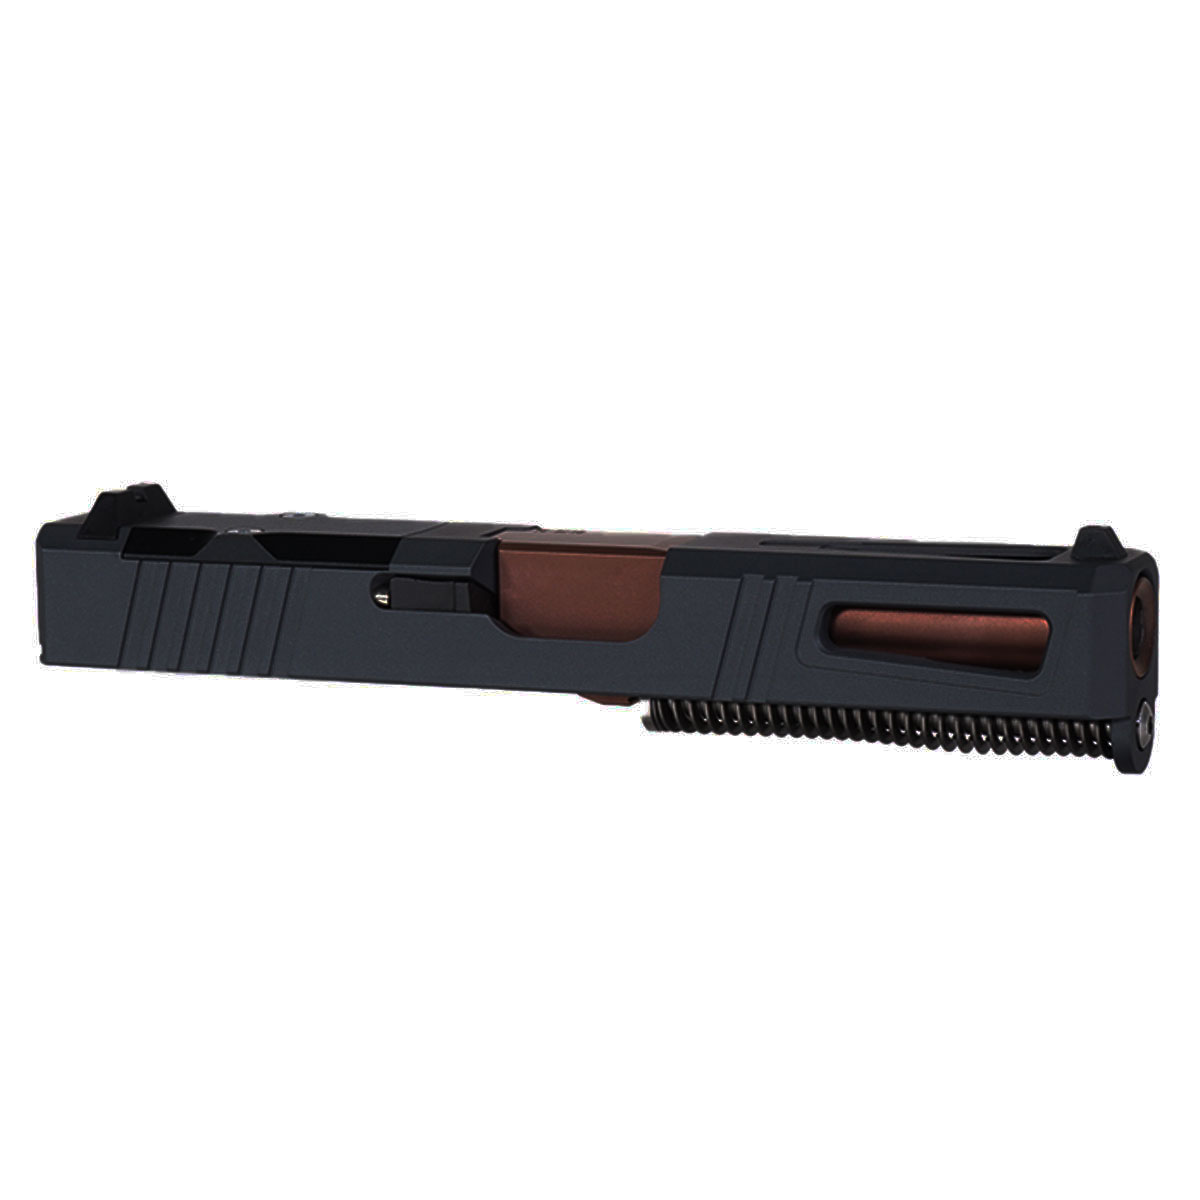 DDS 'Neptune' 9mm Complete Slide Kit - Glock 19 Gen 1-3 Compatible